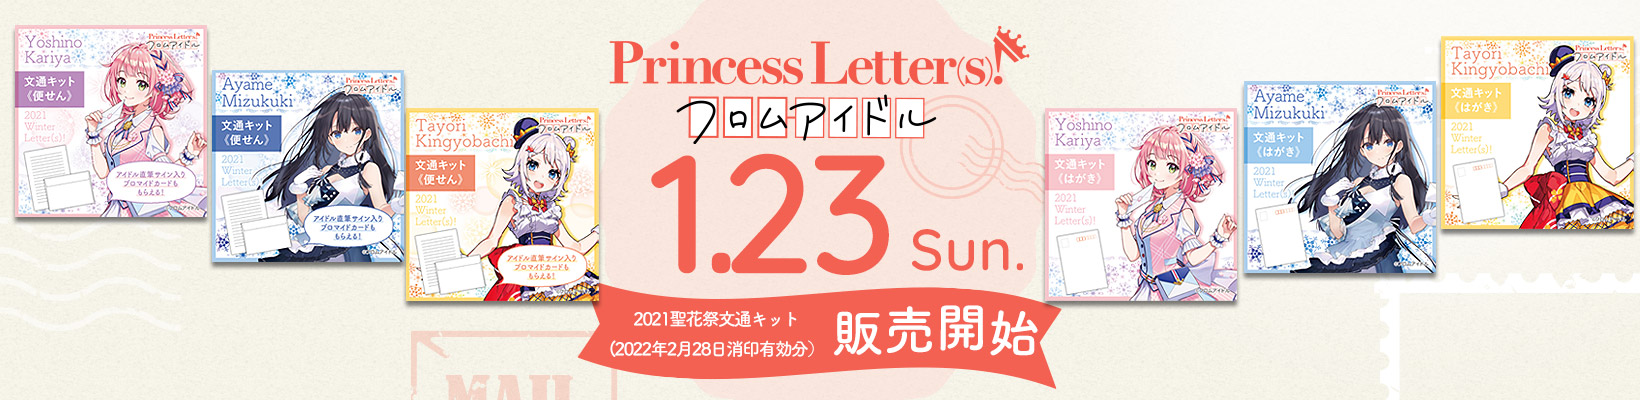 Princess Letter(s)!フロムアイドル 1.23Thu. 販売開始!